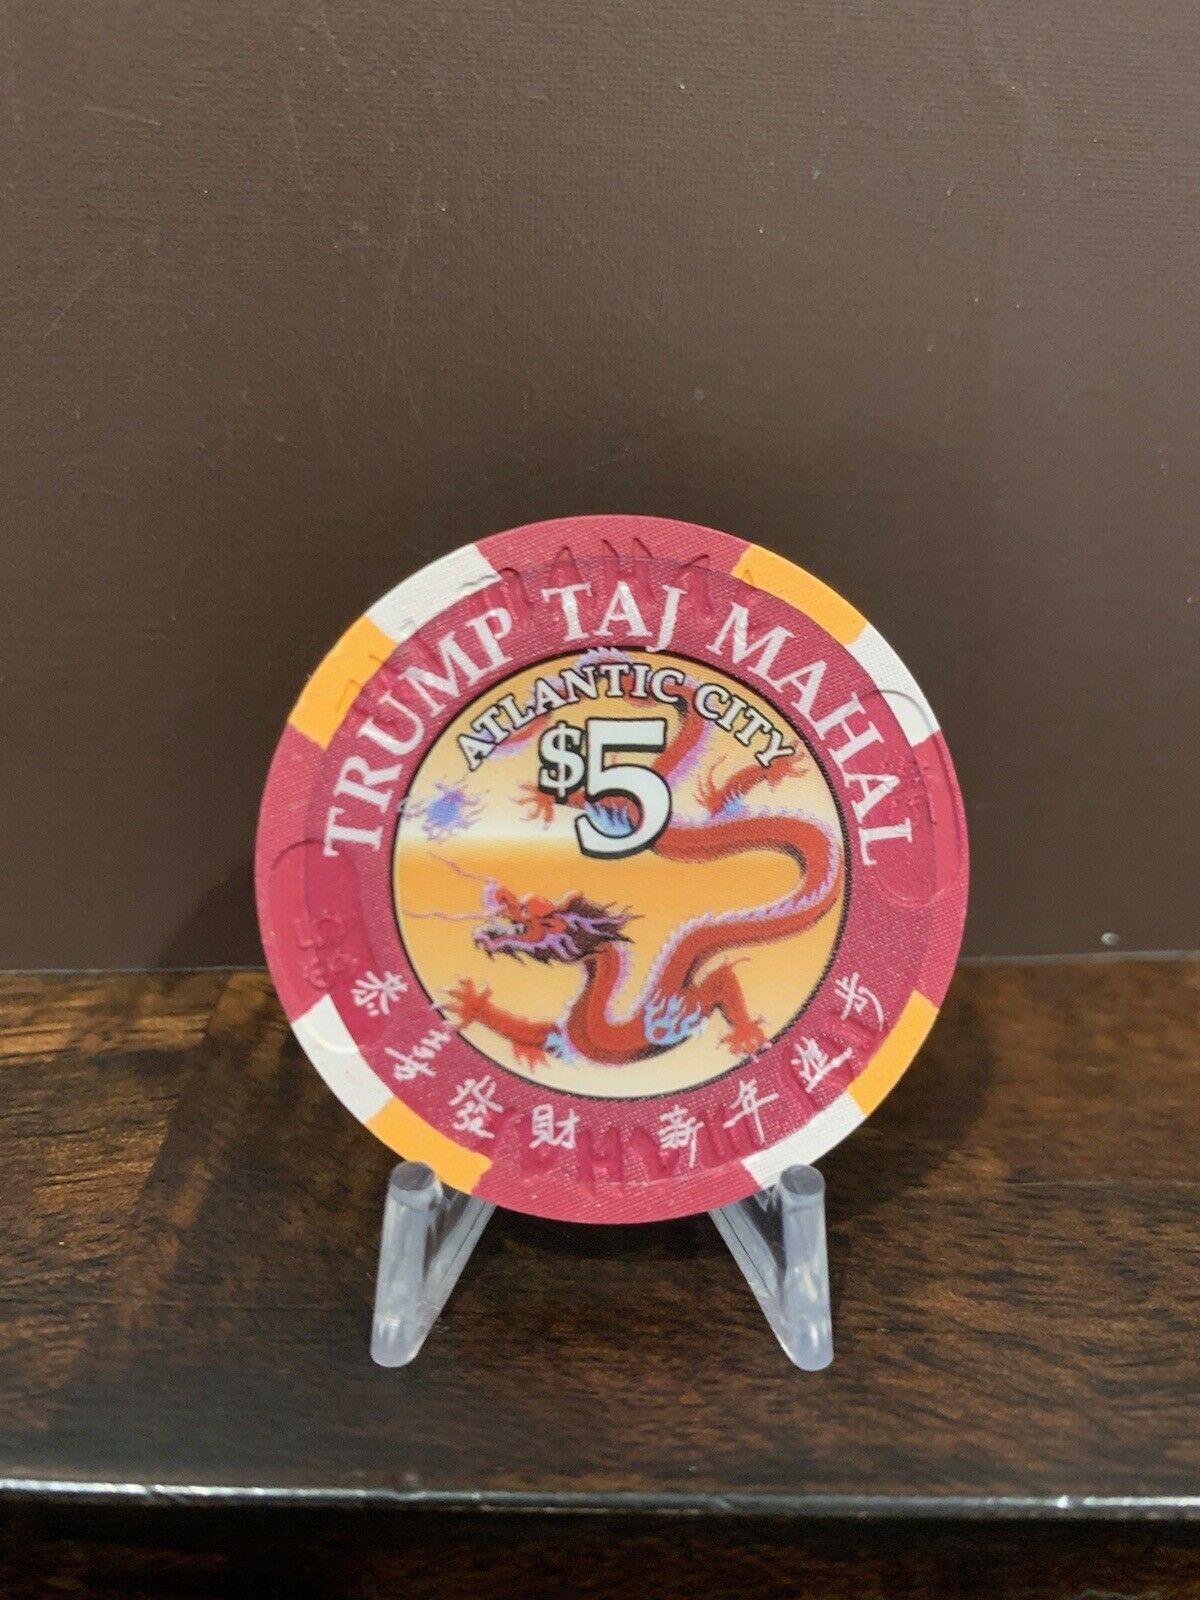 Trump Taj Mahal - $5 Casino Chip - *unc* - Millennium - 2000 Year Of The Dragon